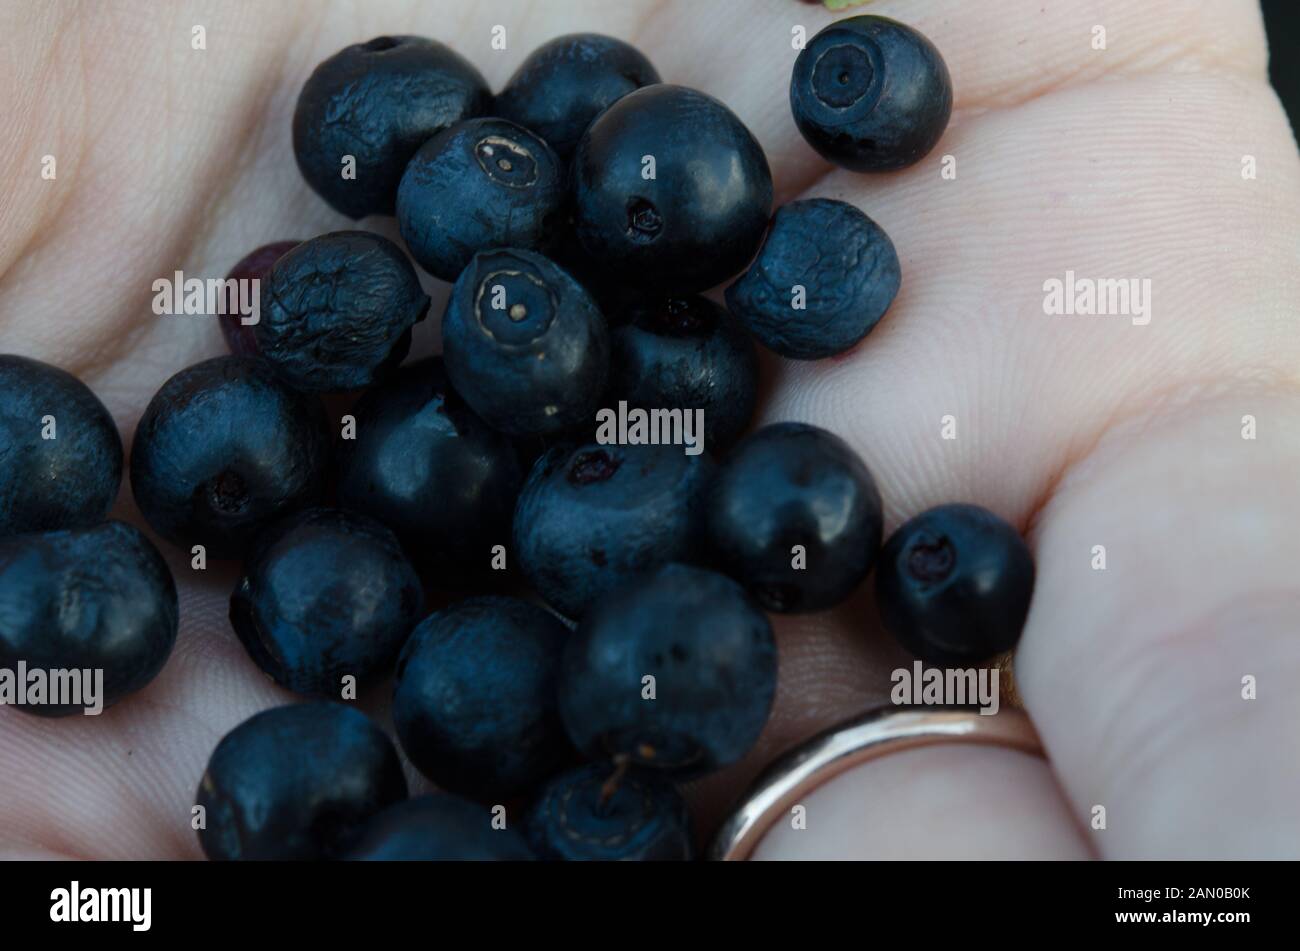 A hand holding venu des bleuets. Petits fruits bleuets dans la main close-up. Banque D'Images